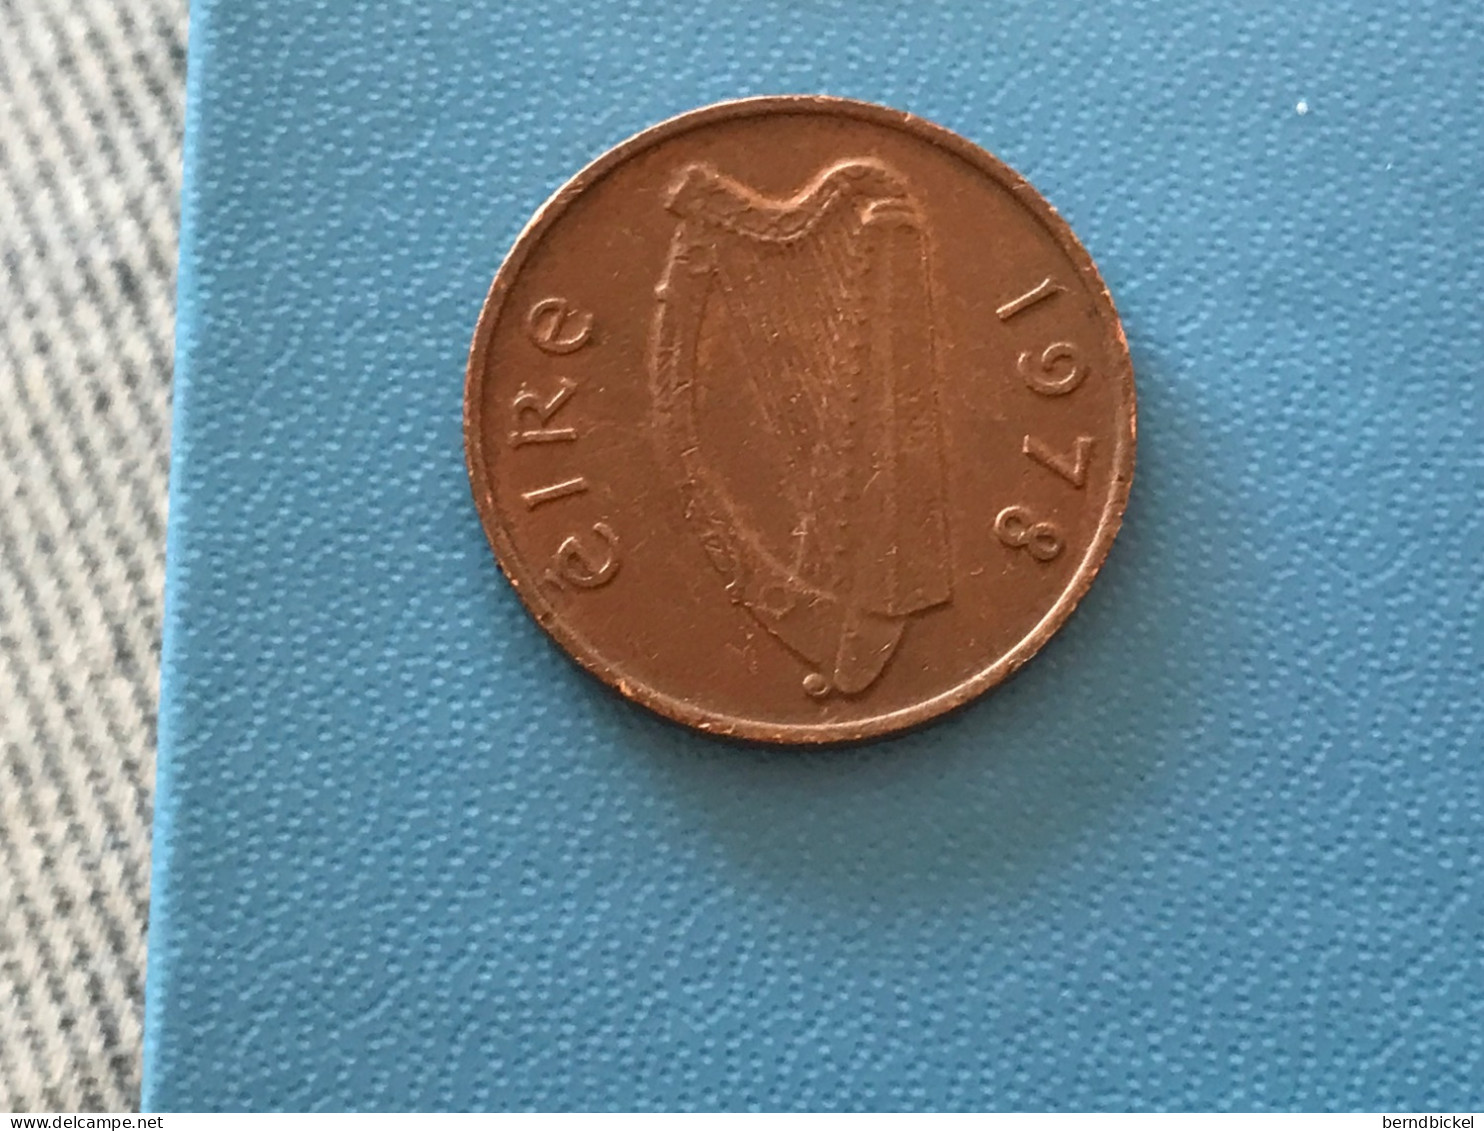 Münze Münzen Umlaufmünze Irland 1 Penny 1978 - Irland